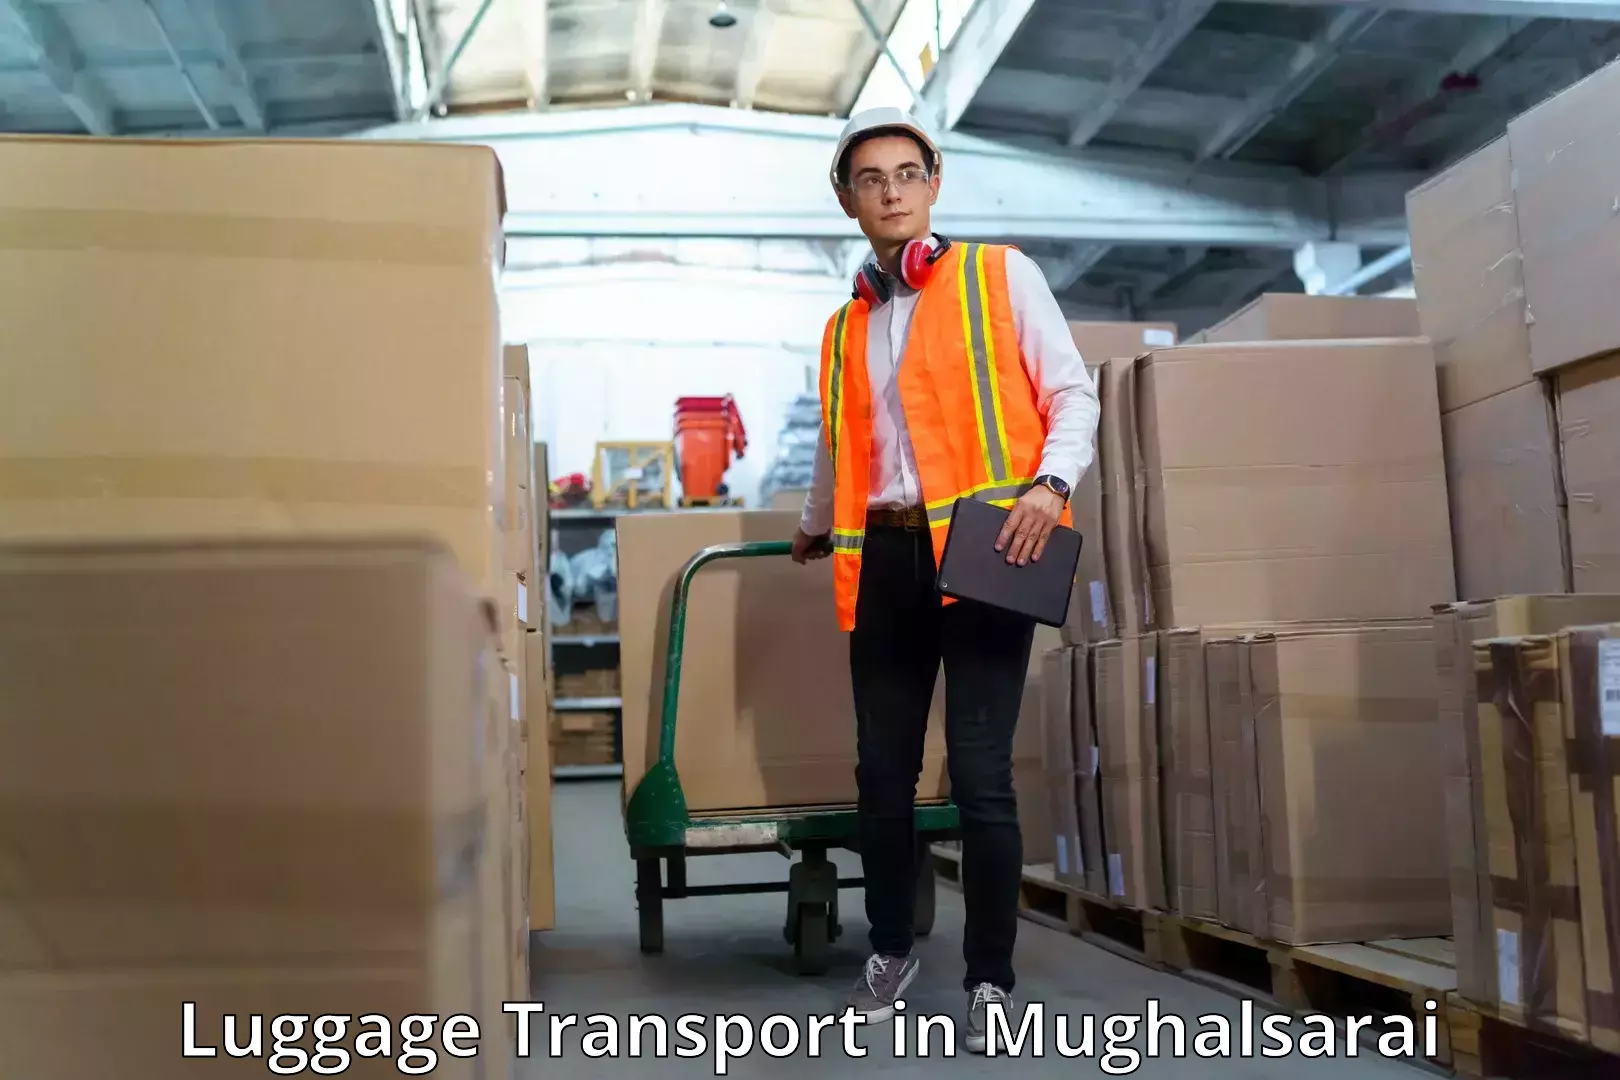 Baggage relocation service in Mughalsarai